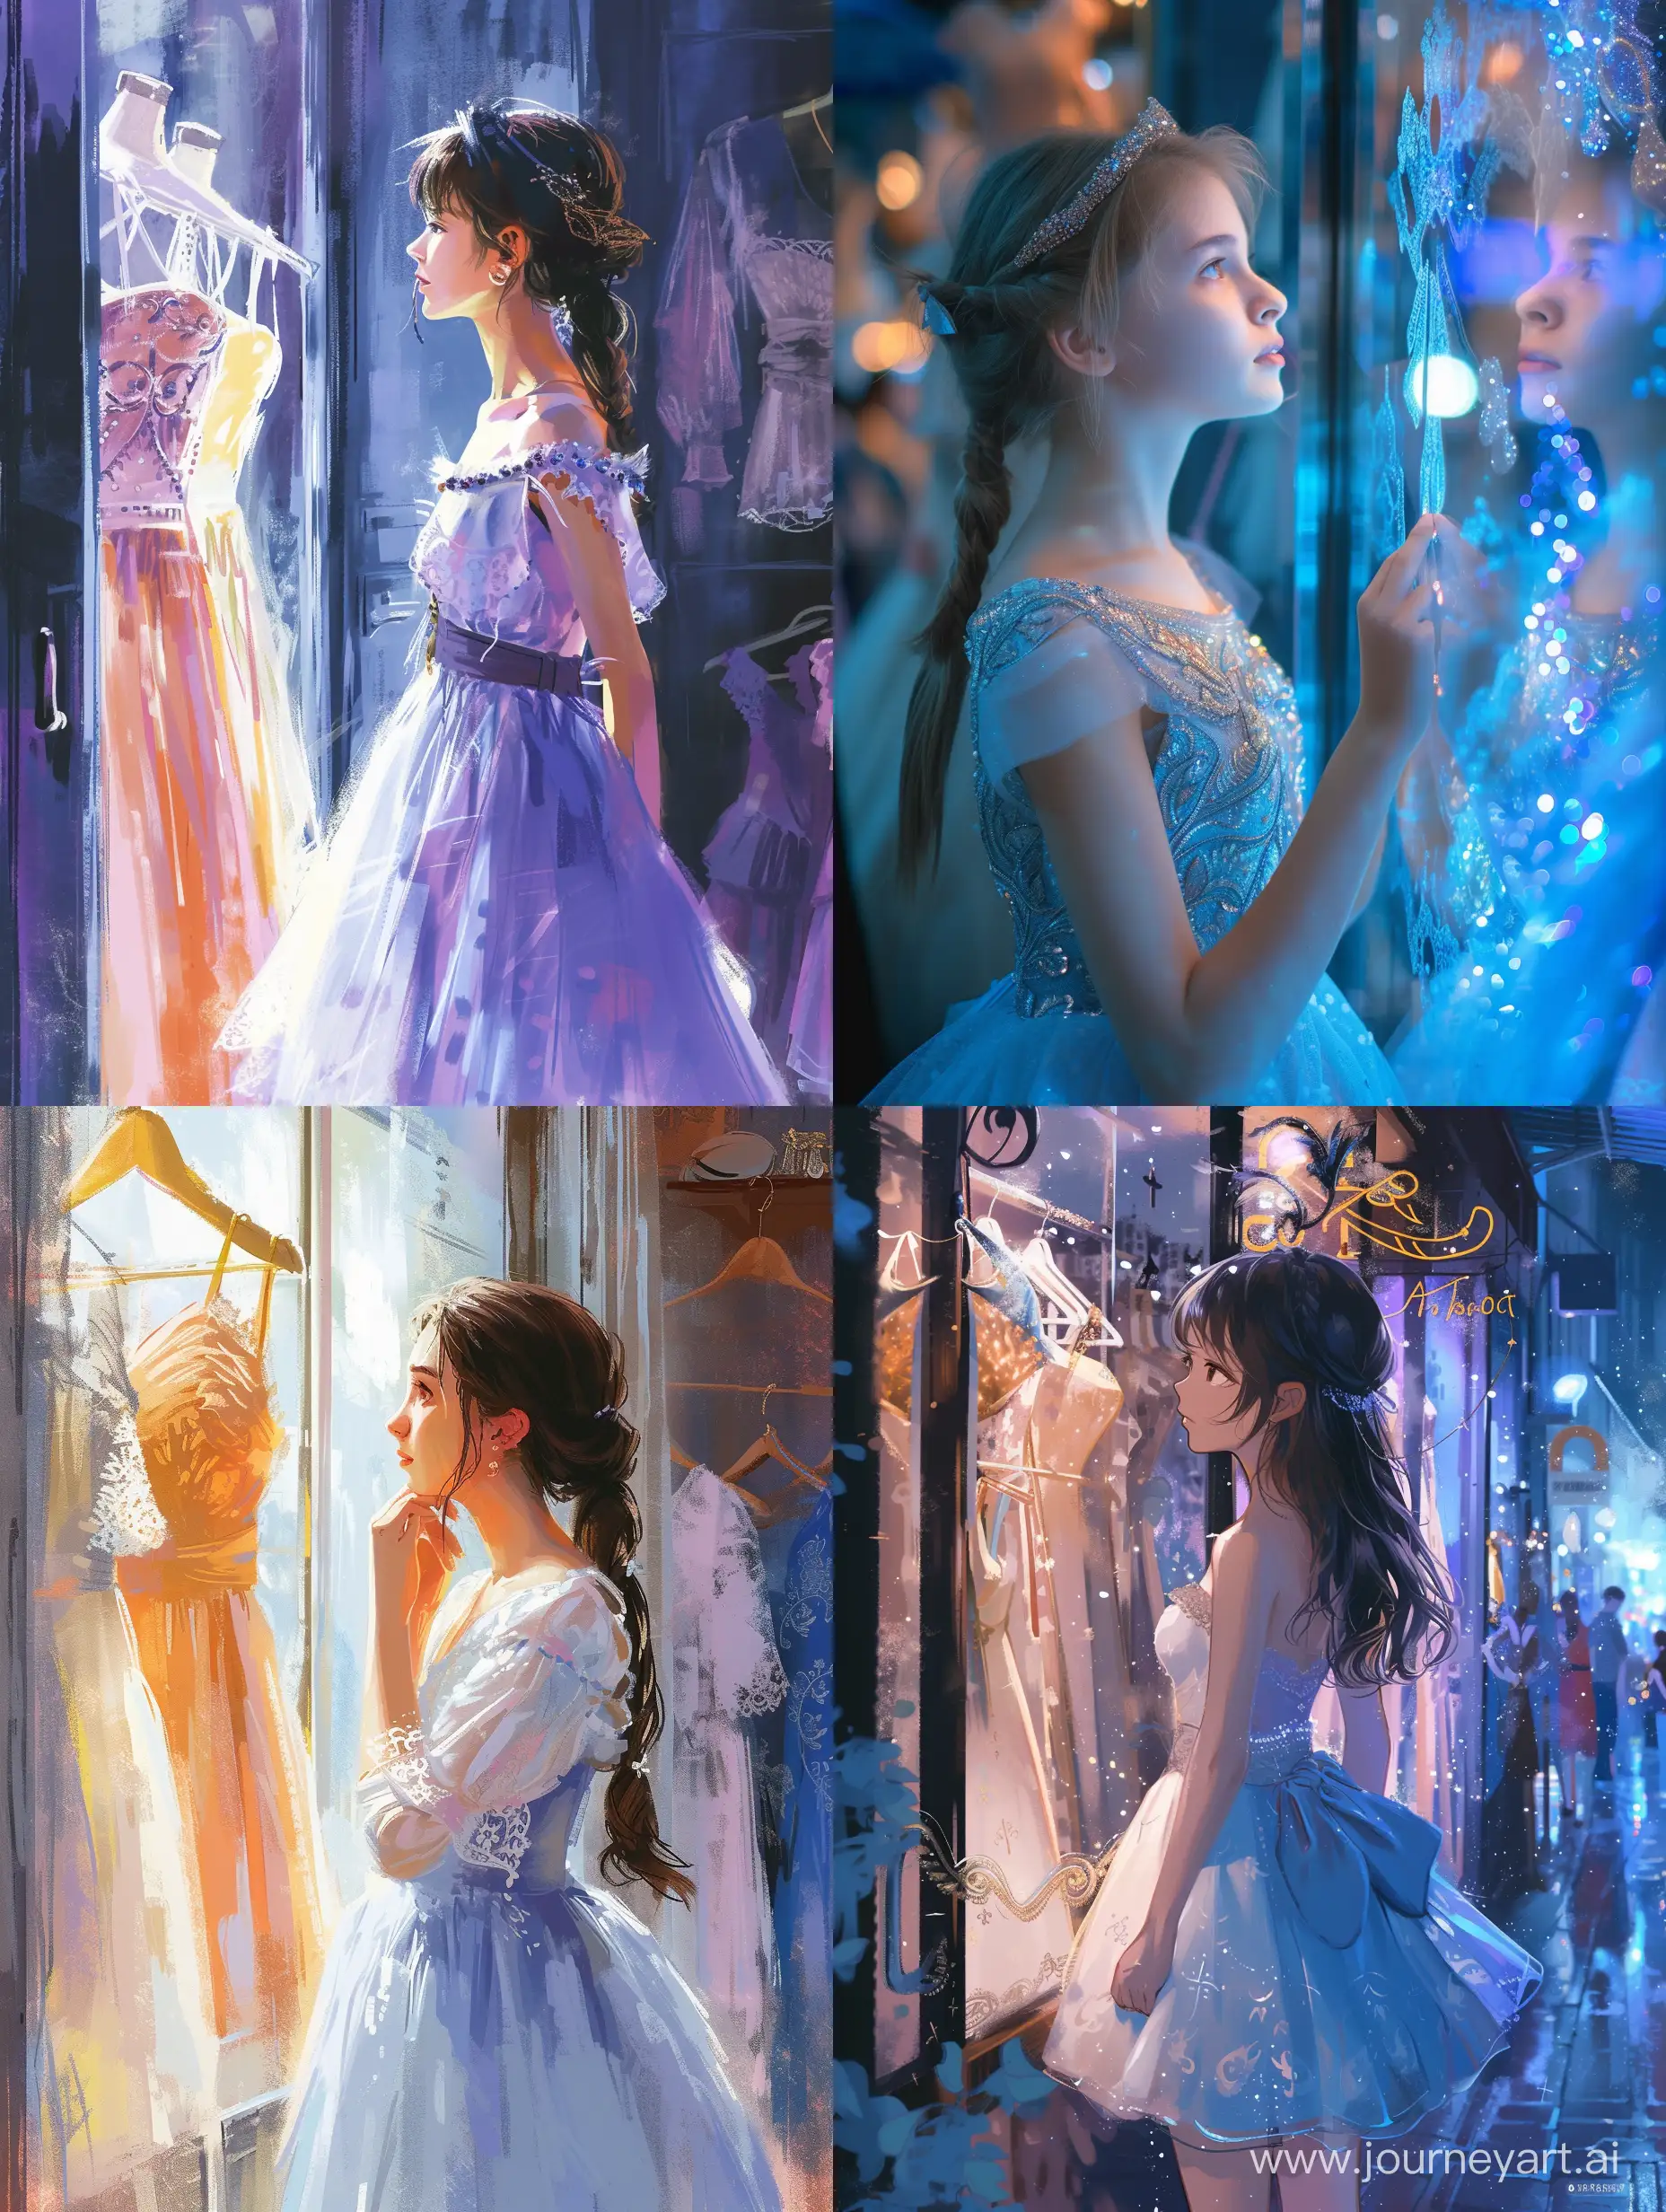 Admiring-Girl-at-Dress-Shop-Window